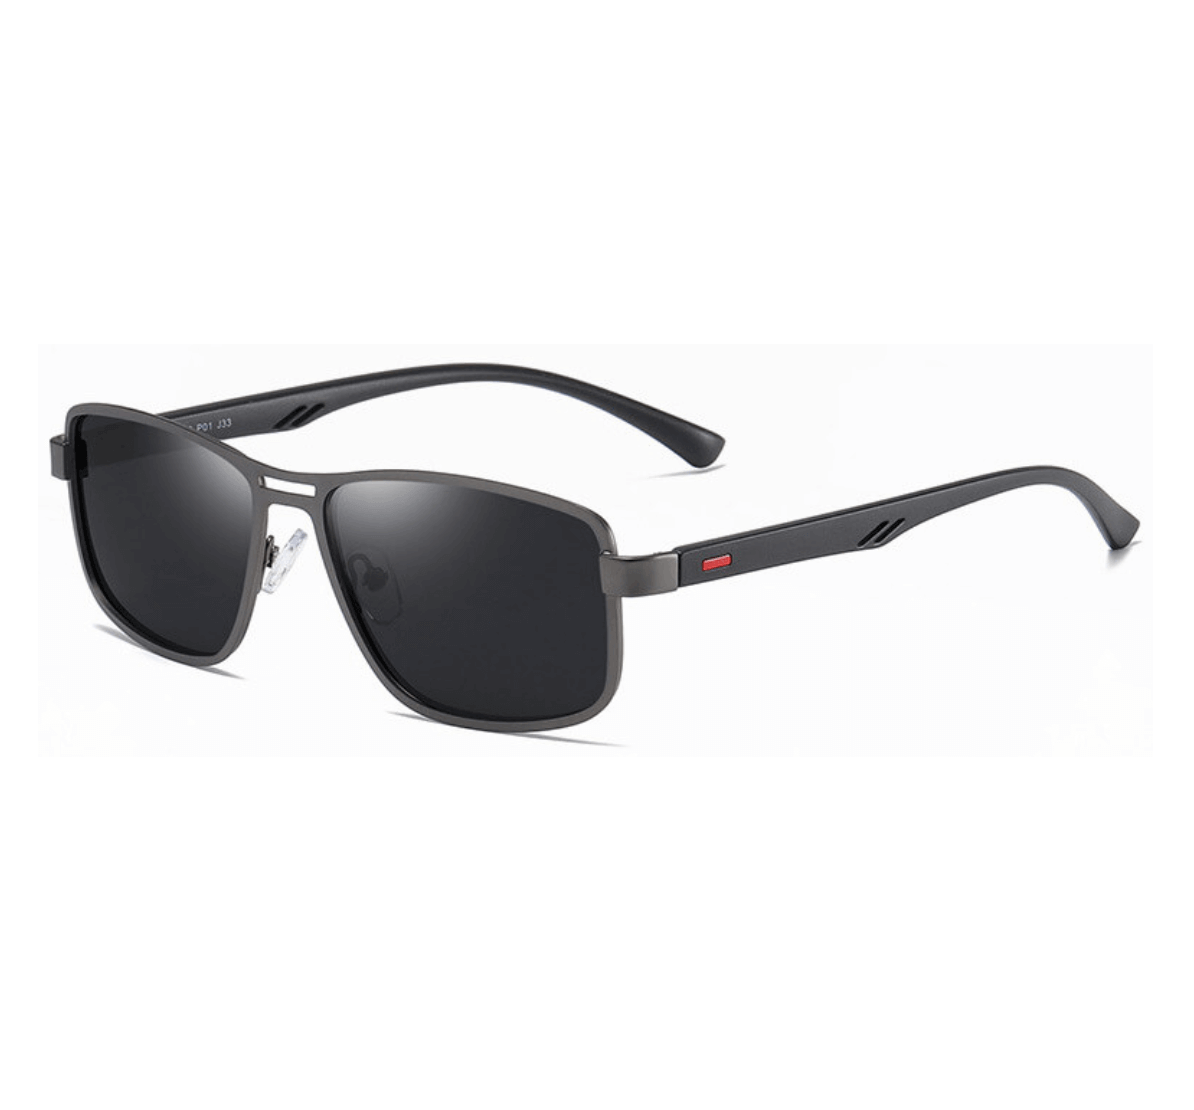 polarized wholesale sunglasses, fashion aviator sunglasses, polarized sunglasses China, bulk polarized sunglasses, sunglasses supplier